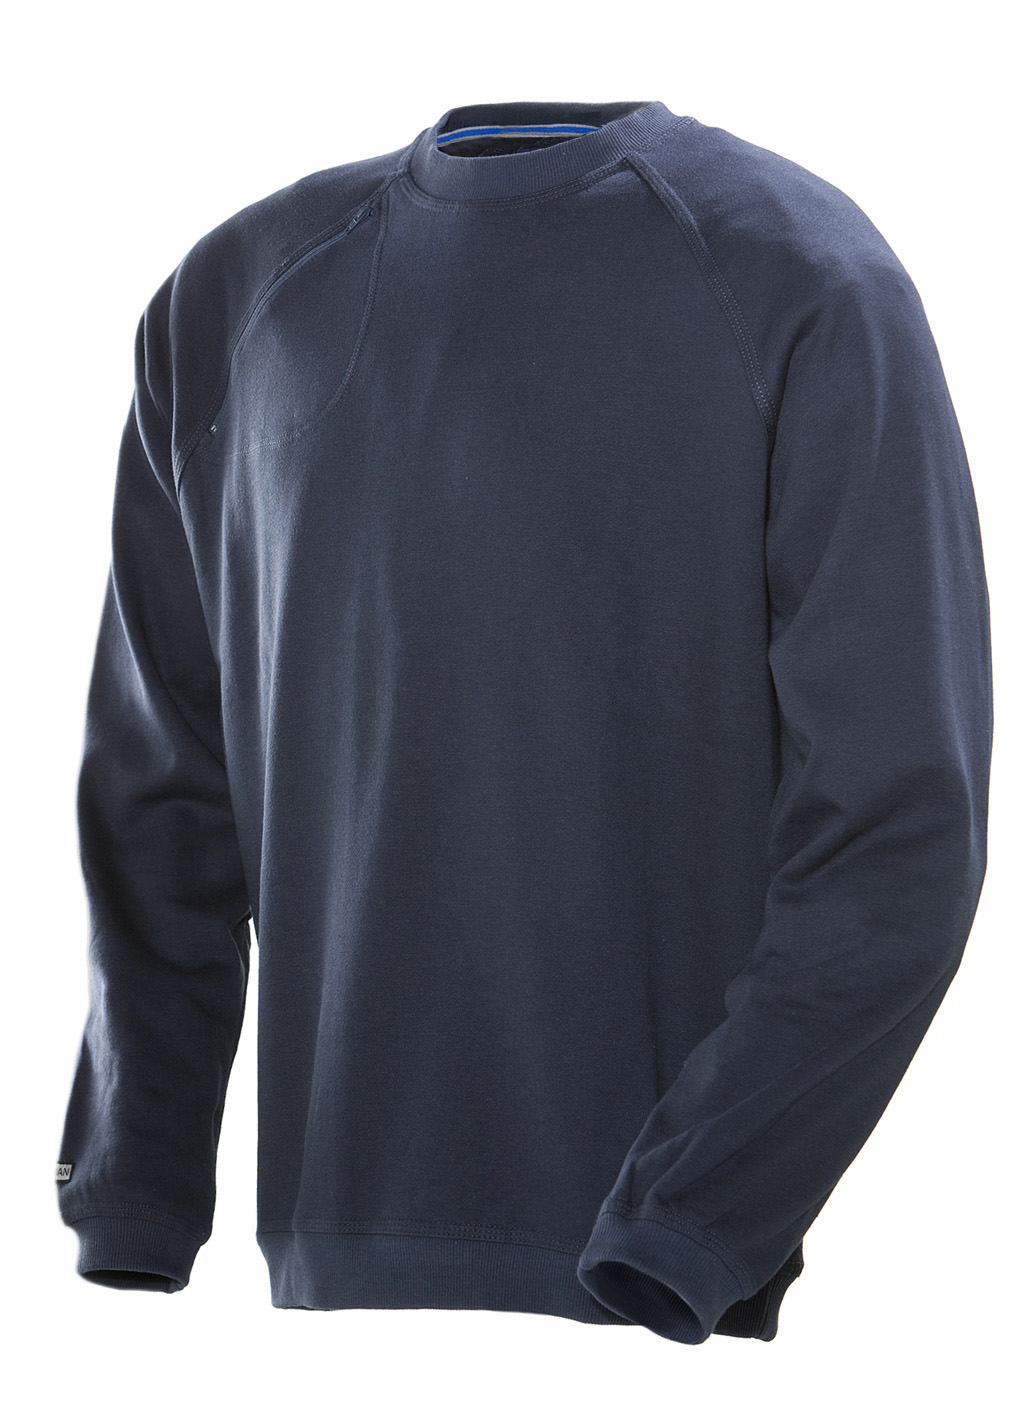 5122 Sweatshirt XXL bleu marine